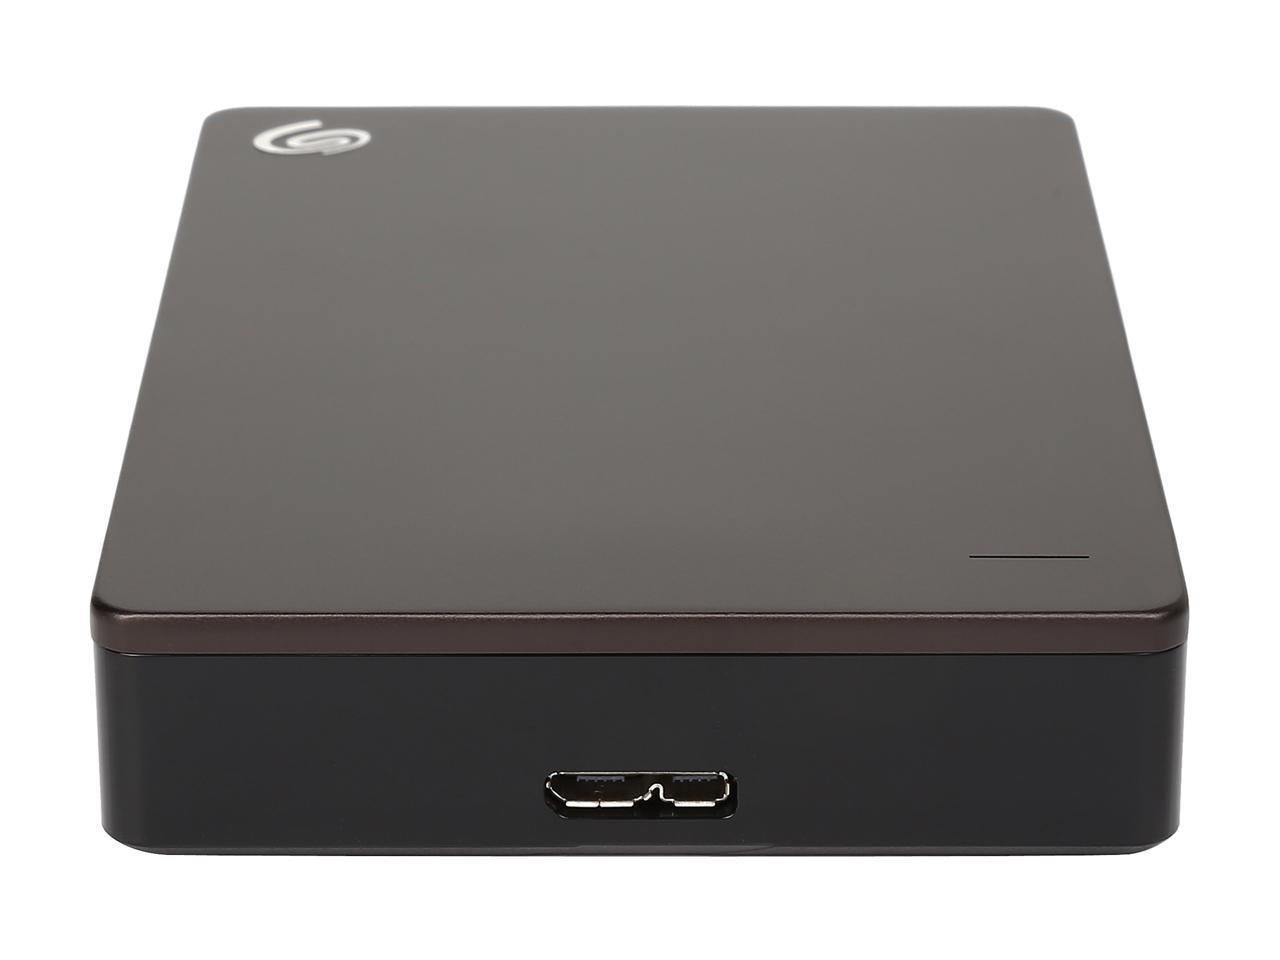 Seagate Backup Plus 4TB USB 3.0 Portable External Hard Drive - STDR4000100 (Black)